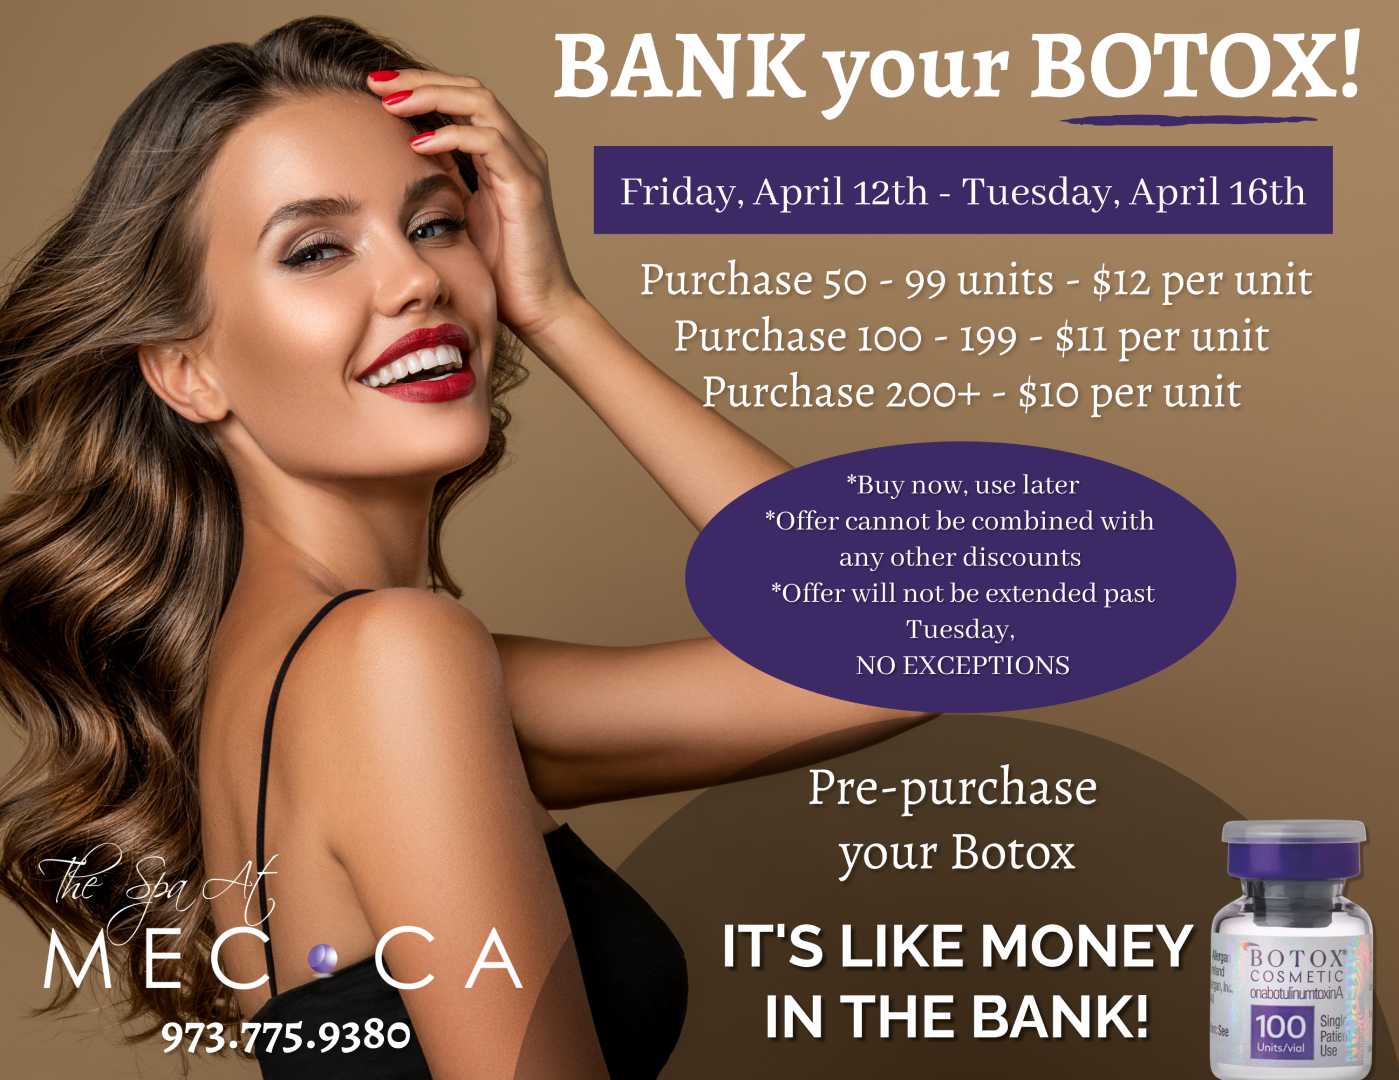 Bank Your Botox - Mecca